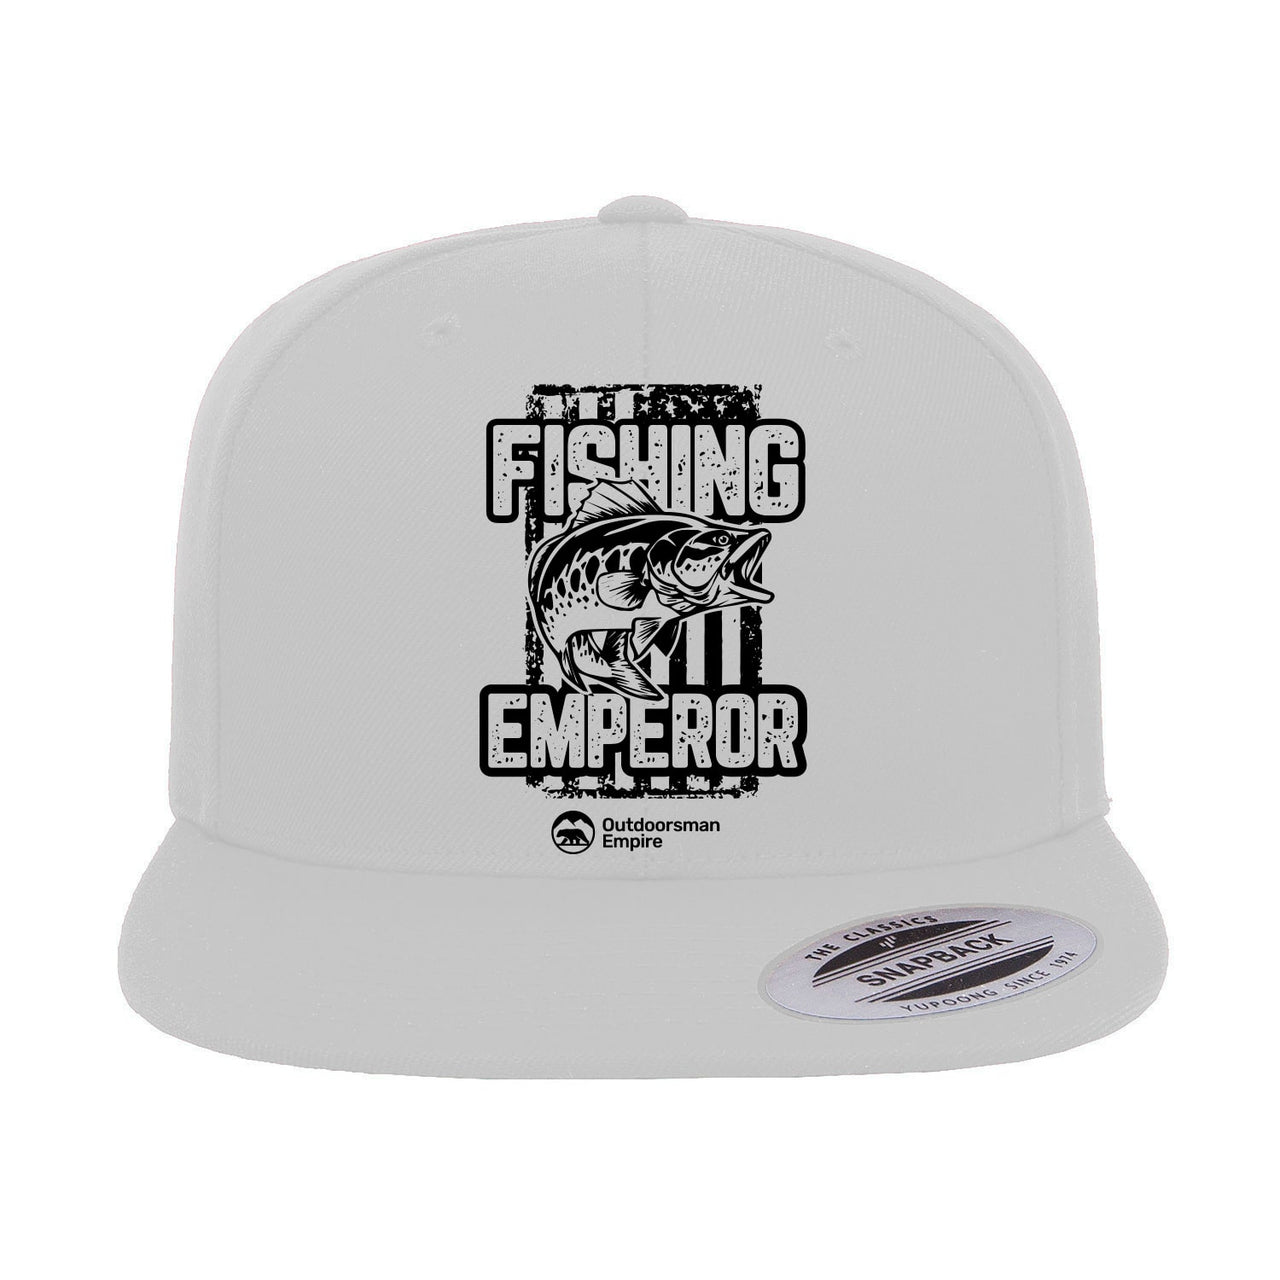 Fishing Emperor v4 Embroidered Flat Bill Cap